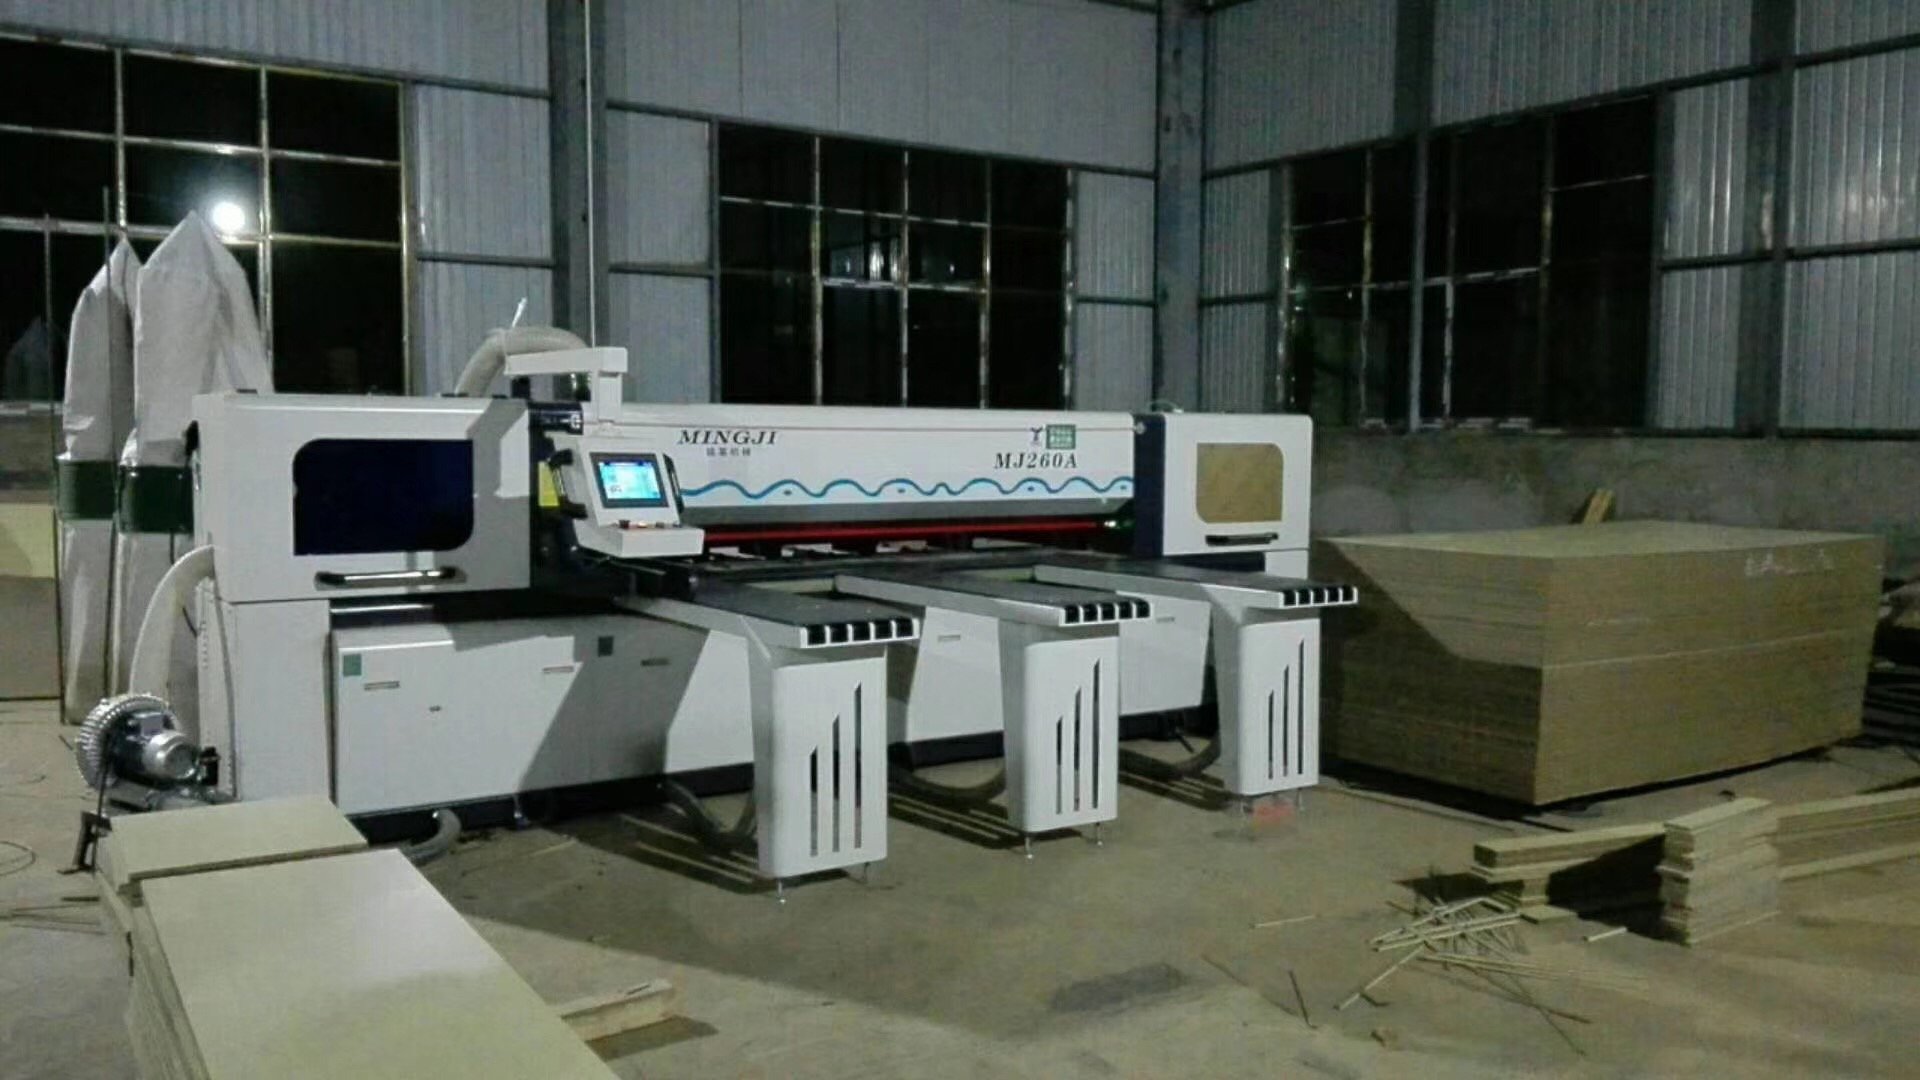 China Foshan Mingji woodworking cnc panel saw machine MJ-260A delivered to Guangzhou